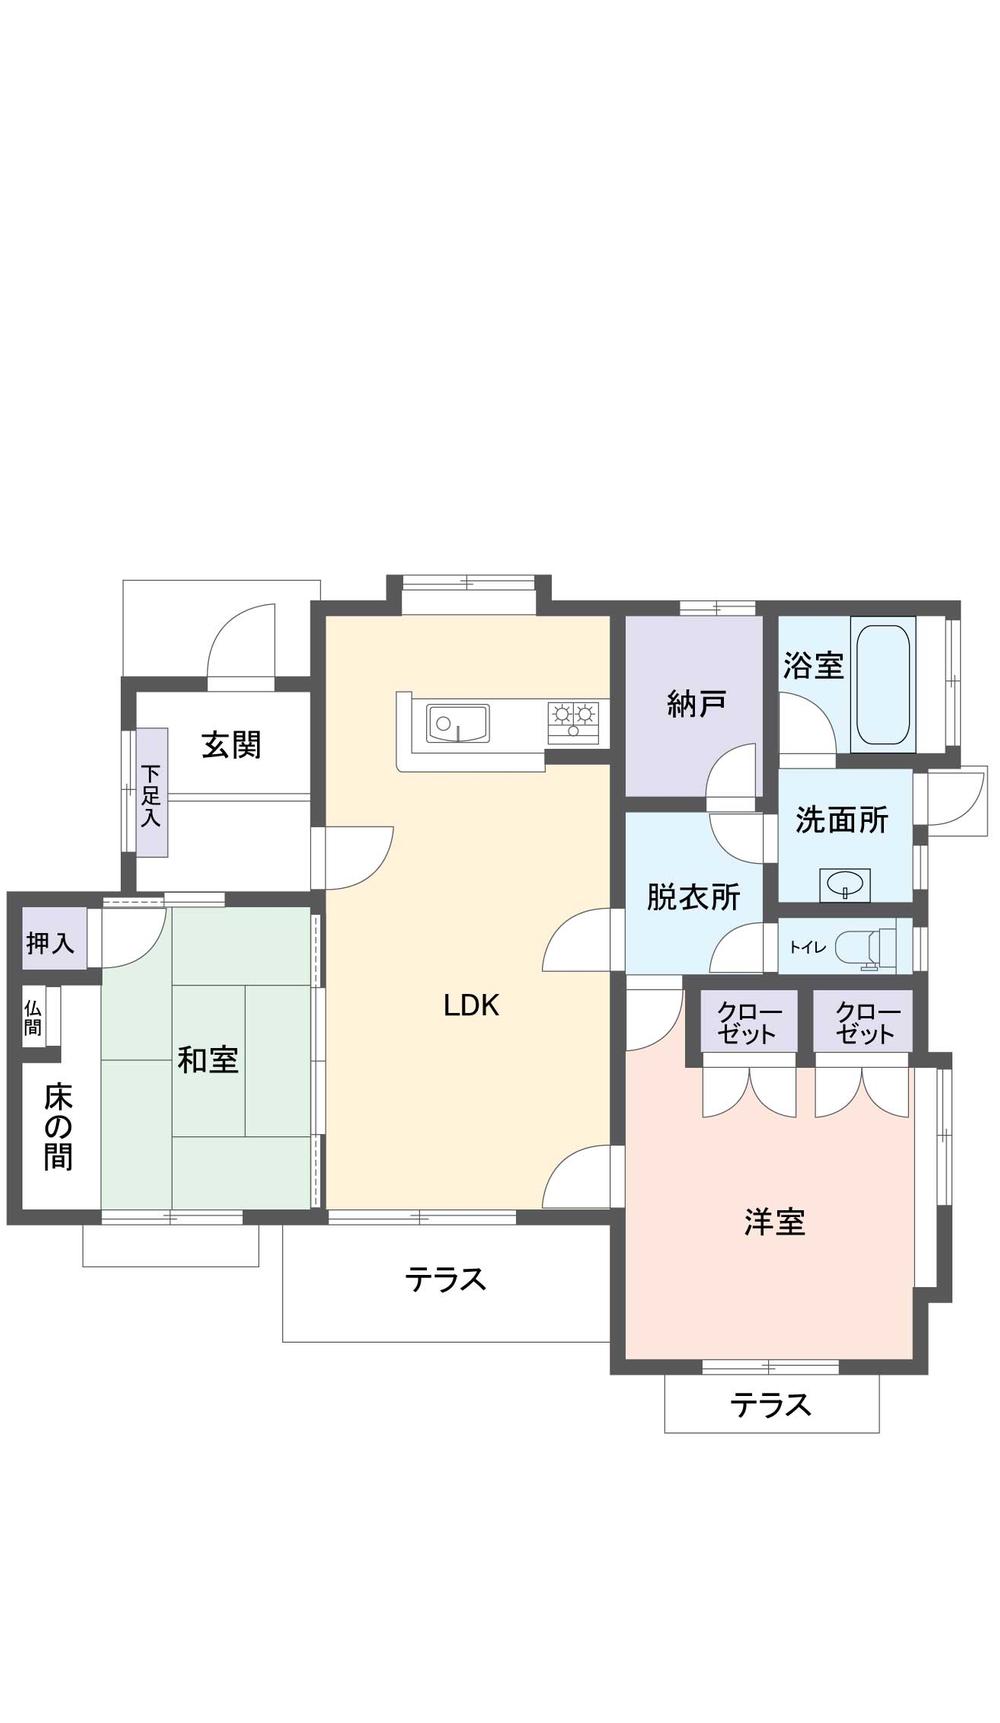 Floor plan. 8.2 million yen, 2LDK + S (storeroom), Land area 197.89 sq m , Building area 79.08 sq m